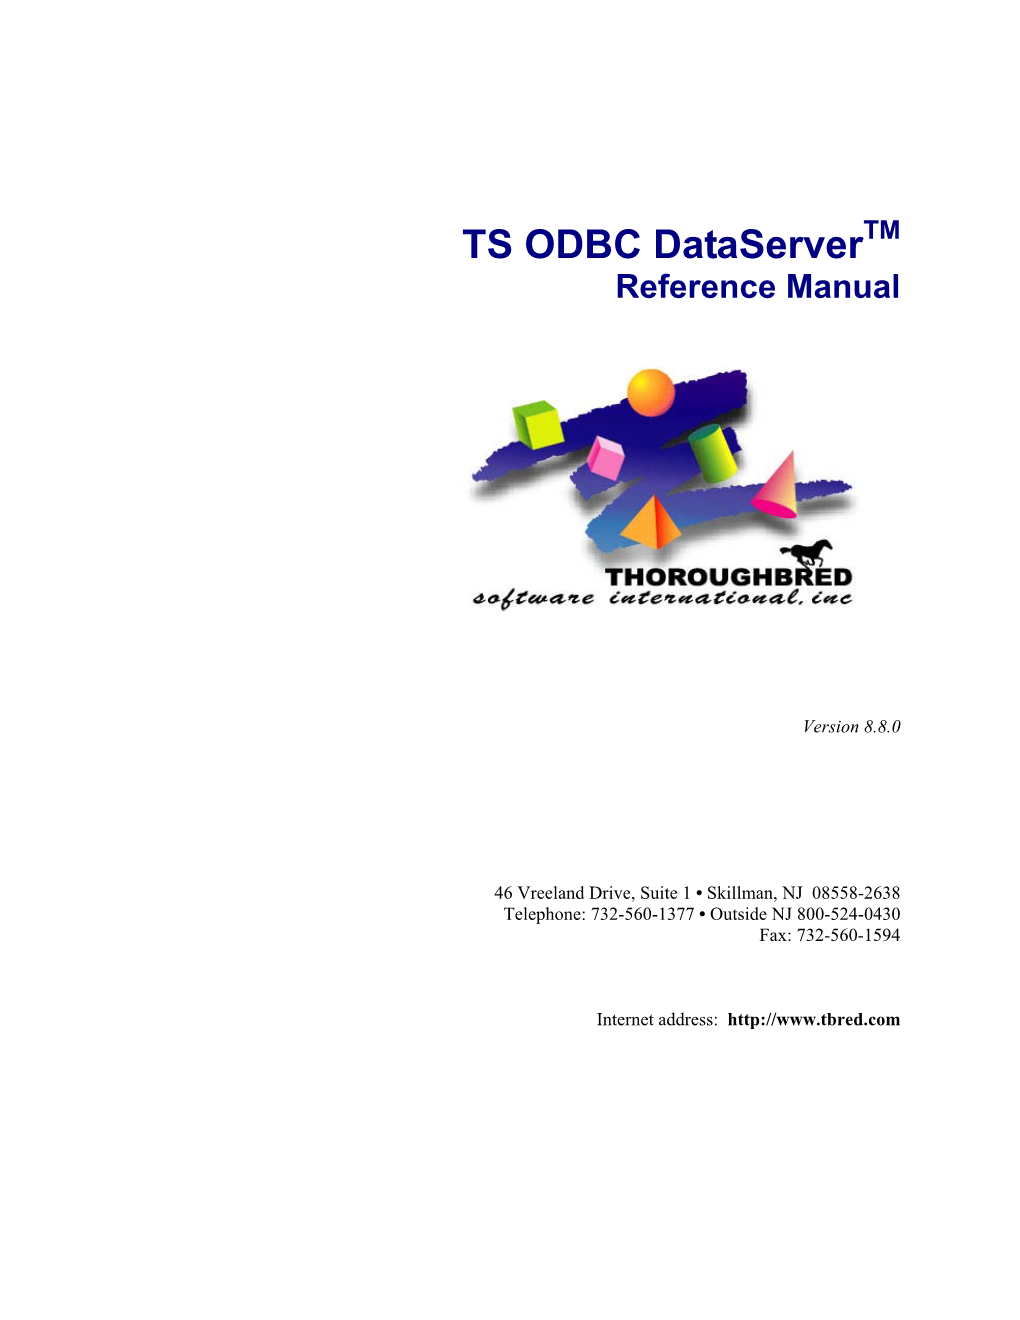 TS ODBC Dataservertm Reference Manual